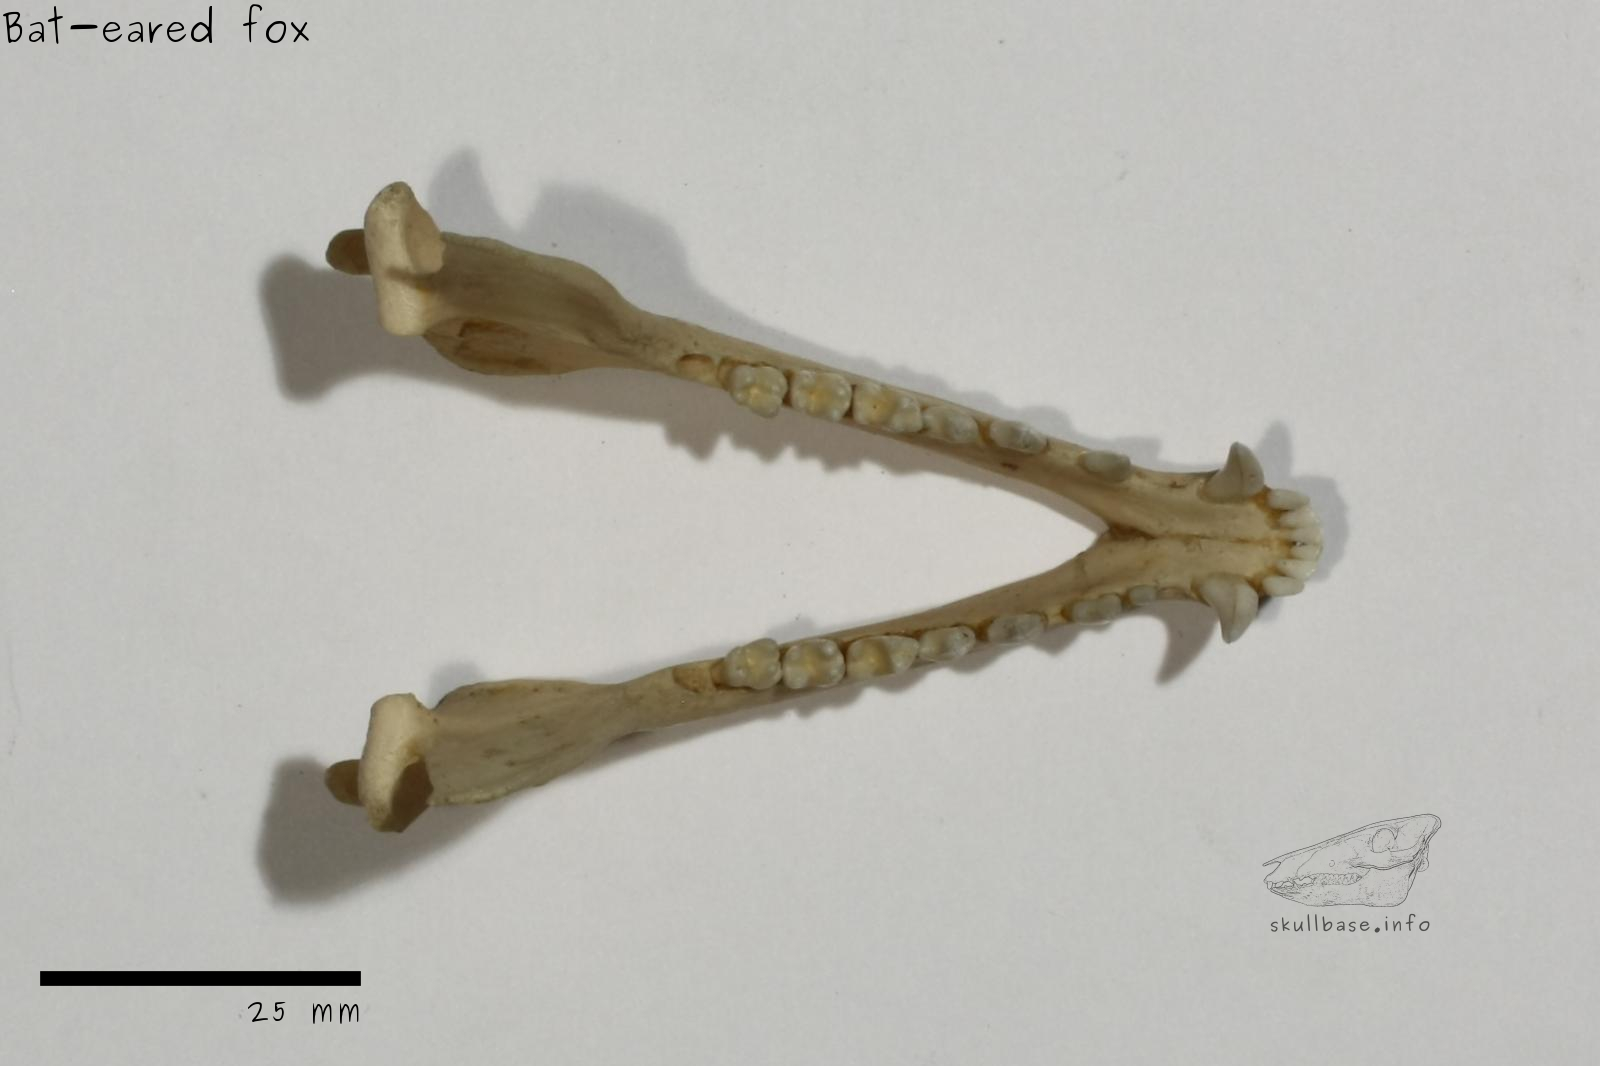 Bat-eared fox (Otocyon megalotis) jaw